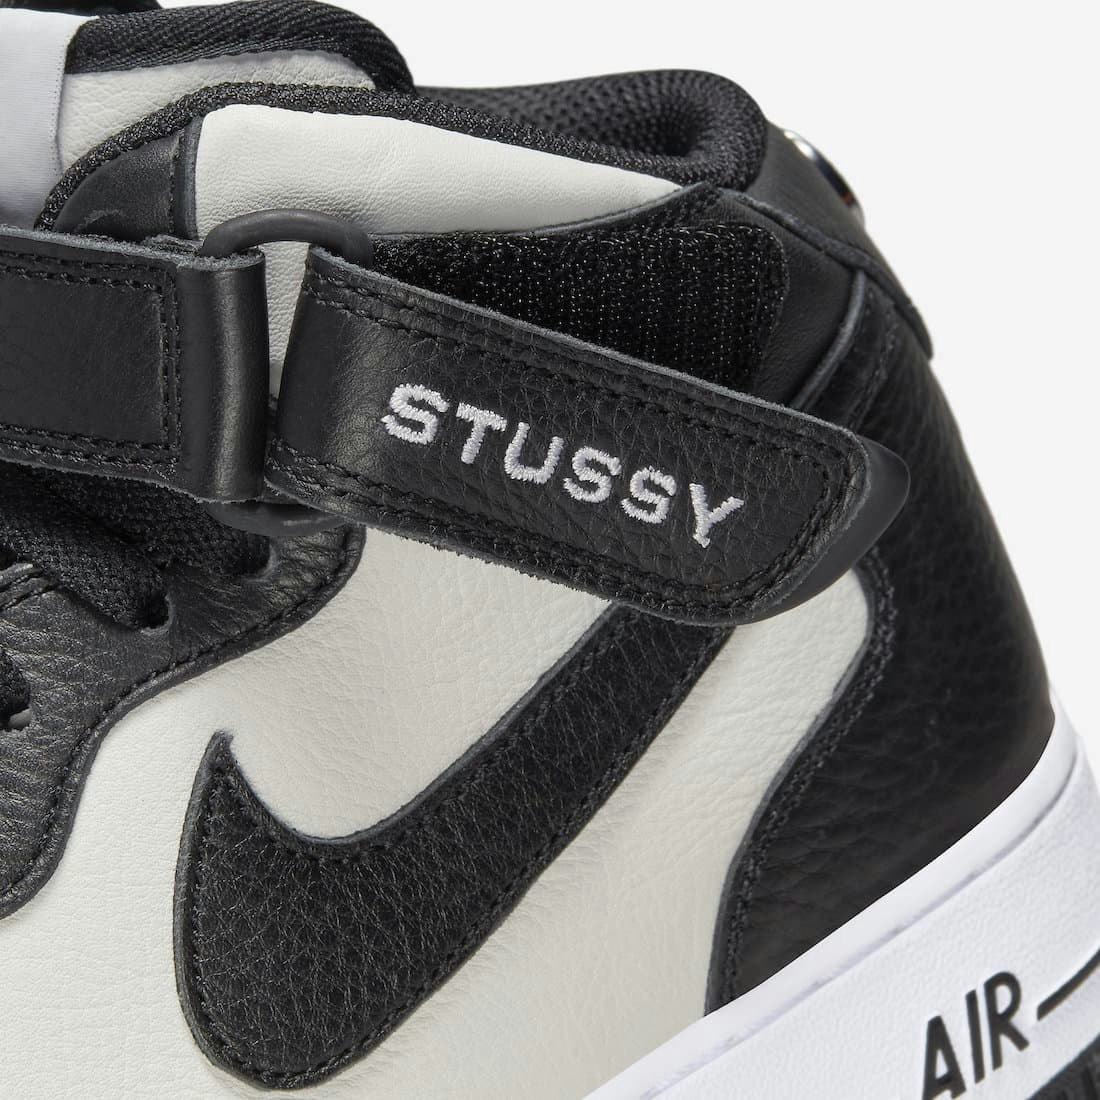 Stüssy x Nike Air Force 1 Mid "Black/White"